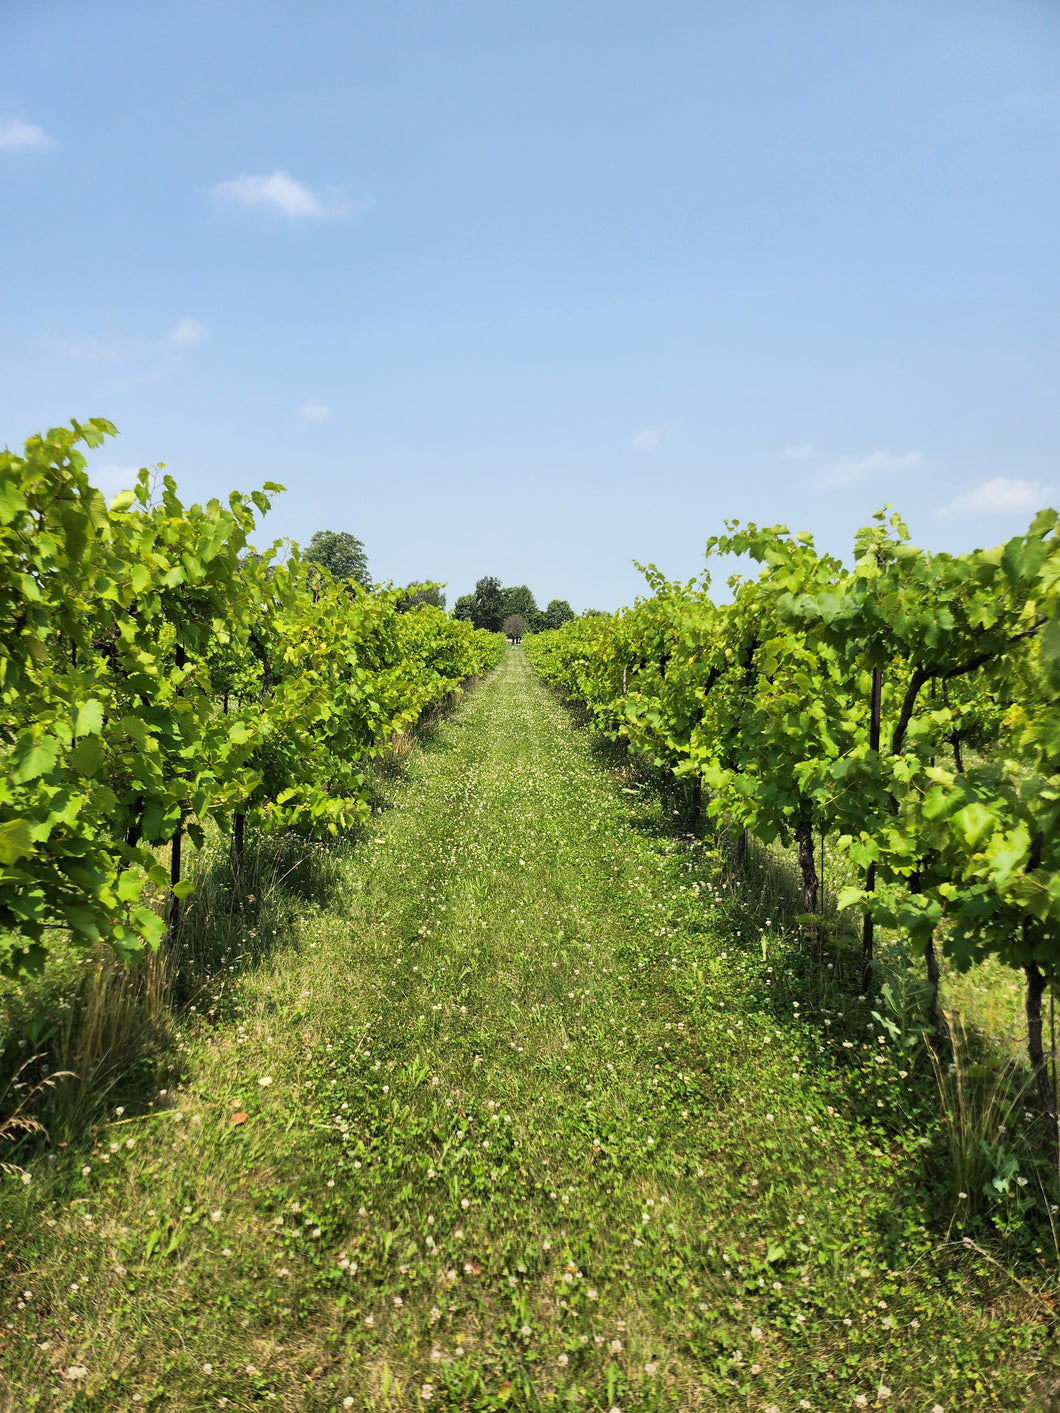 Healthy Soil makes wonderful wine